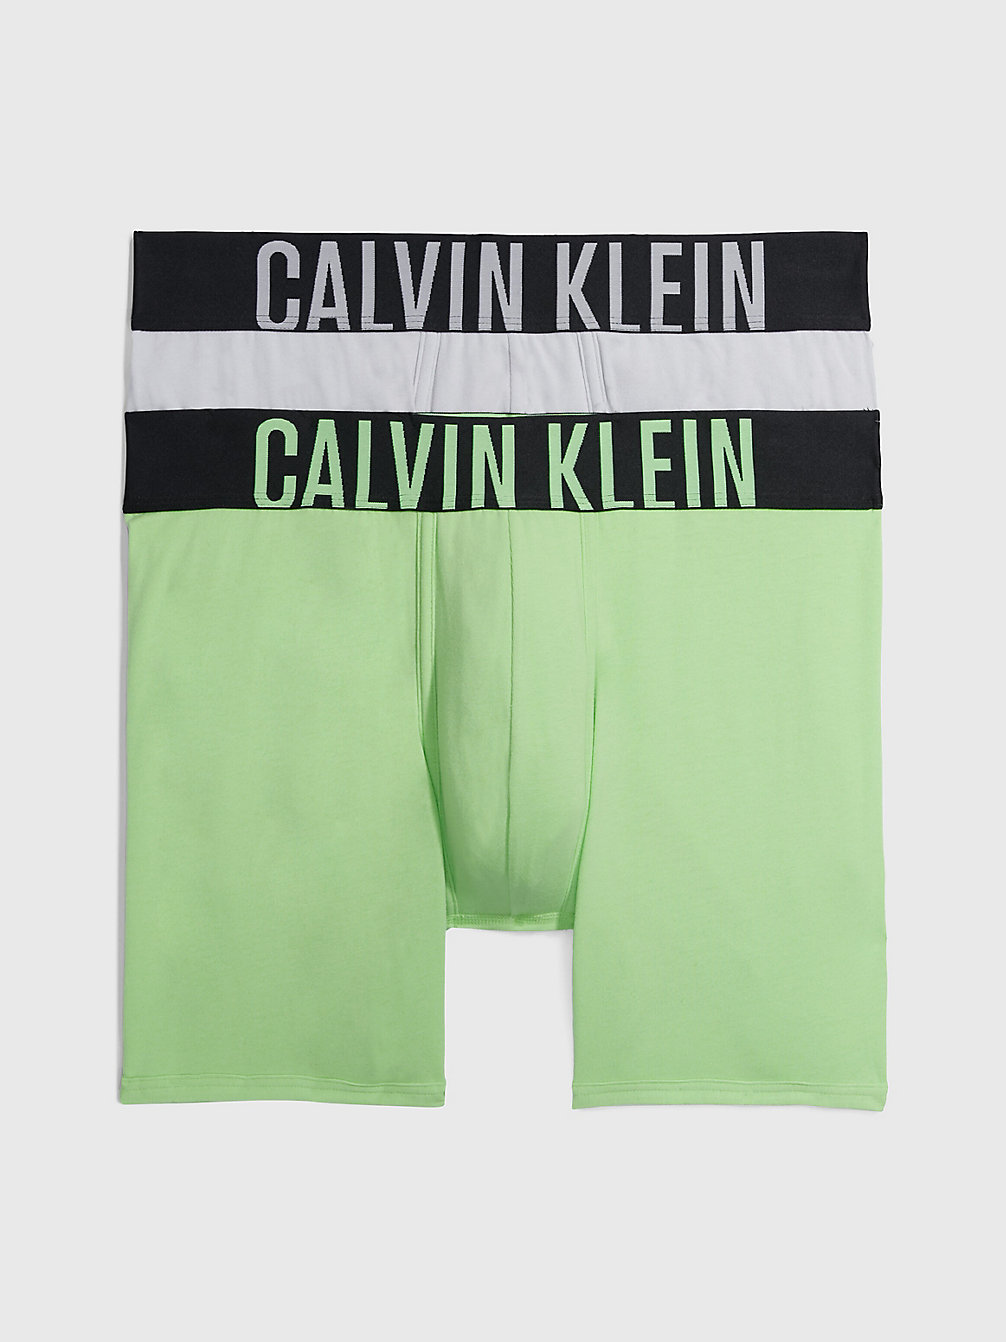 TROPIC LIME, GALAXY GREY 2 Pack Boxer Briefs - Intense Power undefined men Calvin Klein